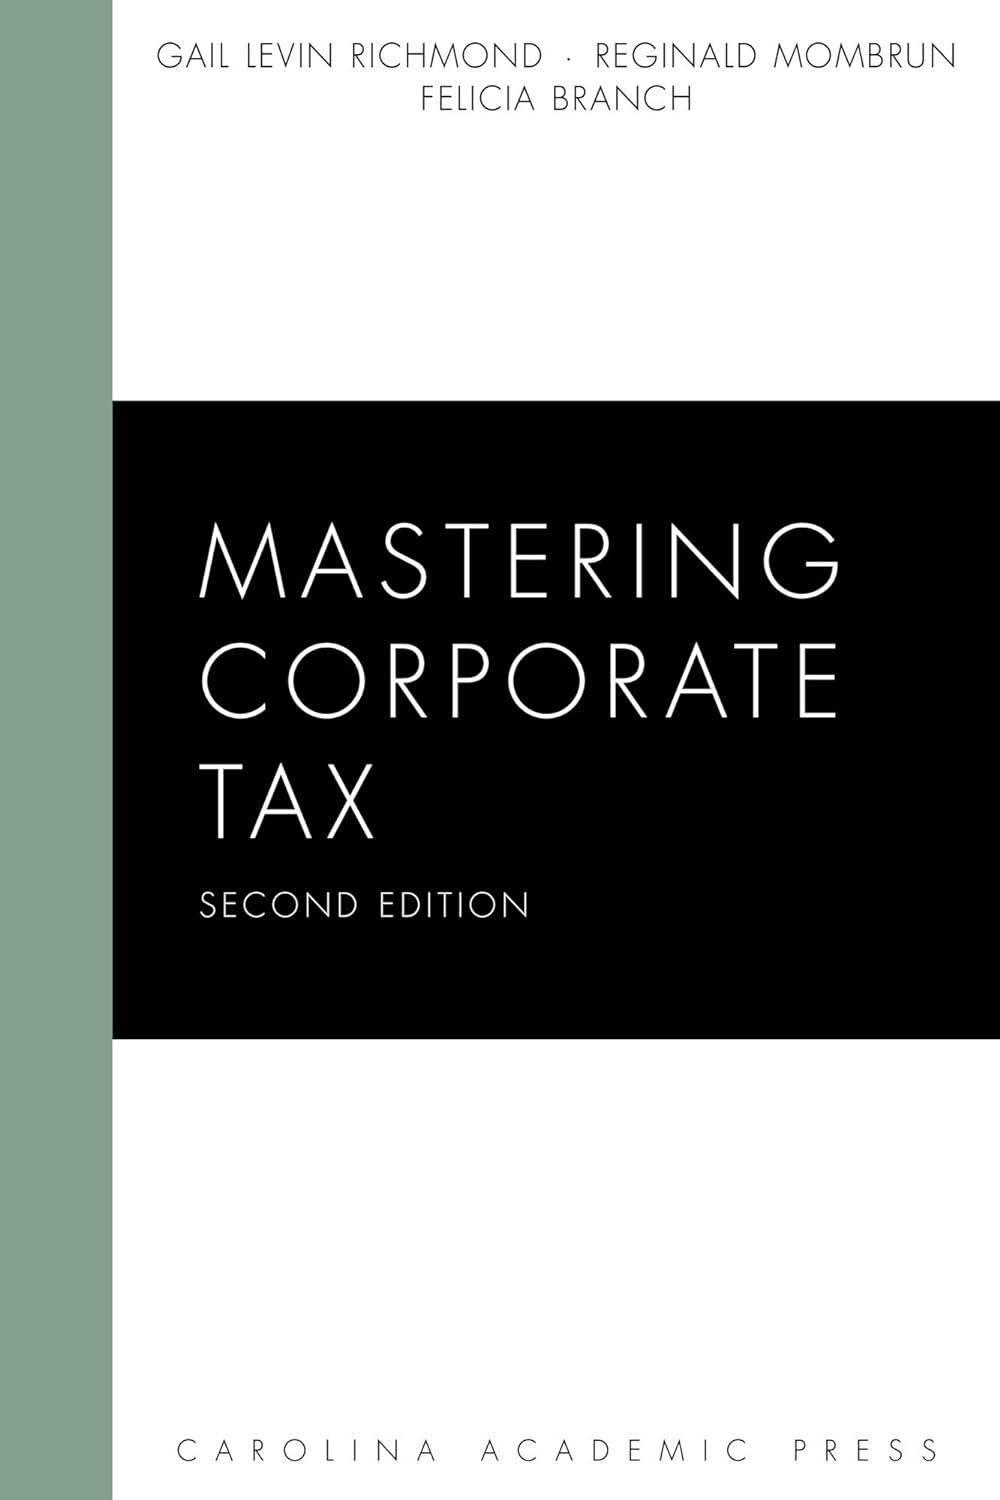 mastering corporate tax 2nd edition gail richmond, reginald mombrun, felicia branch 153100802x, 978-1531008024